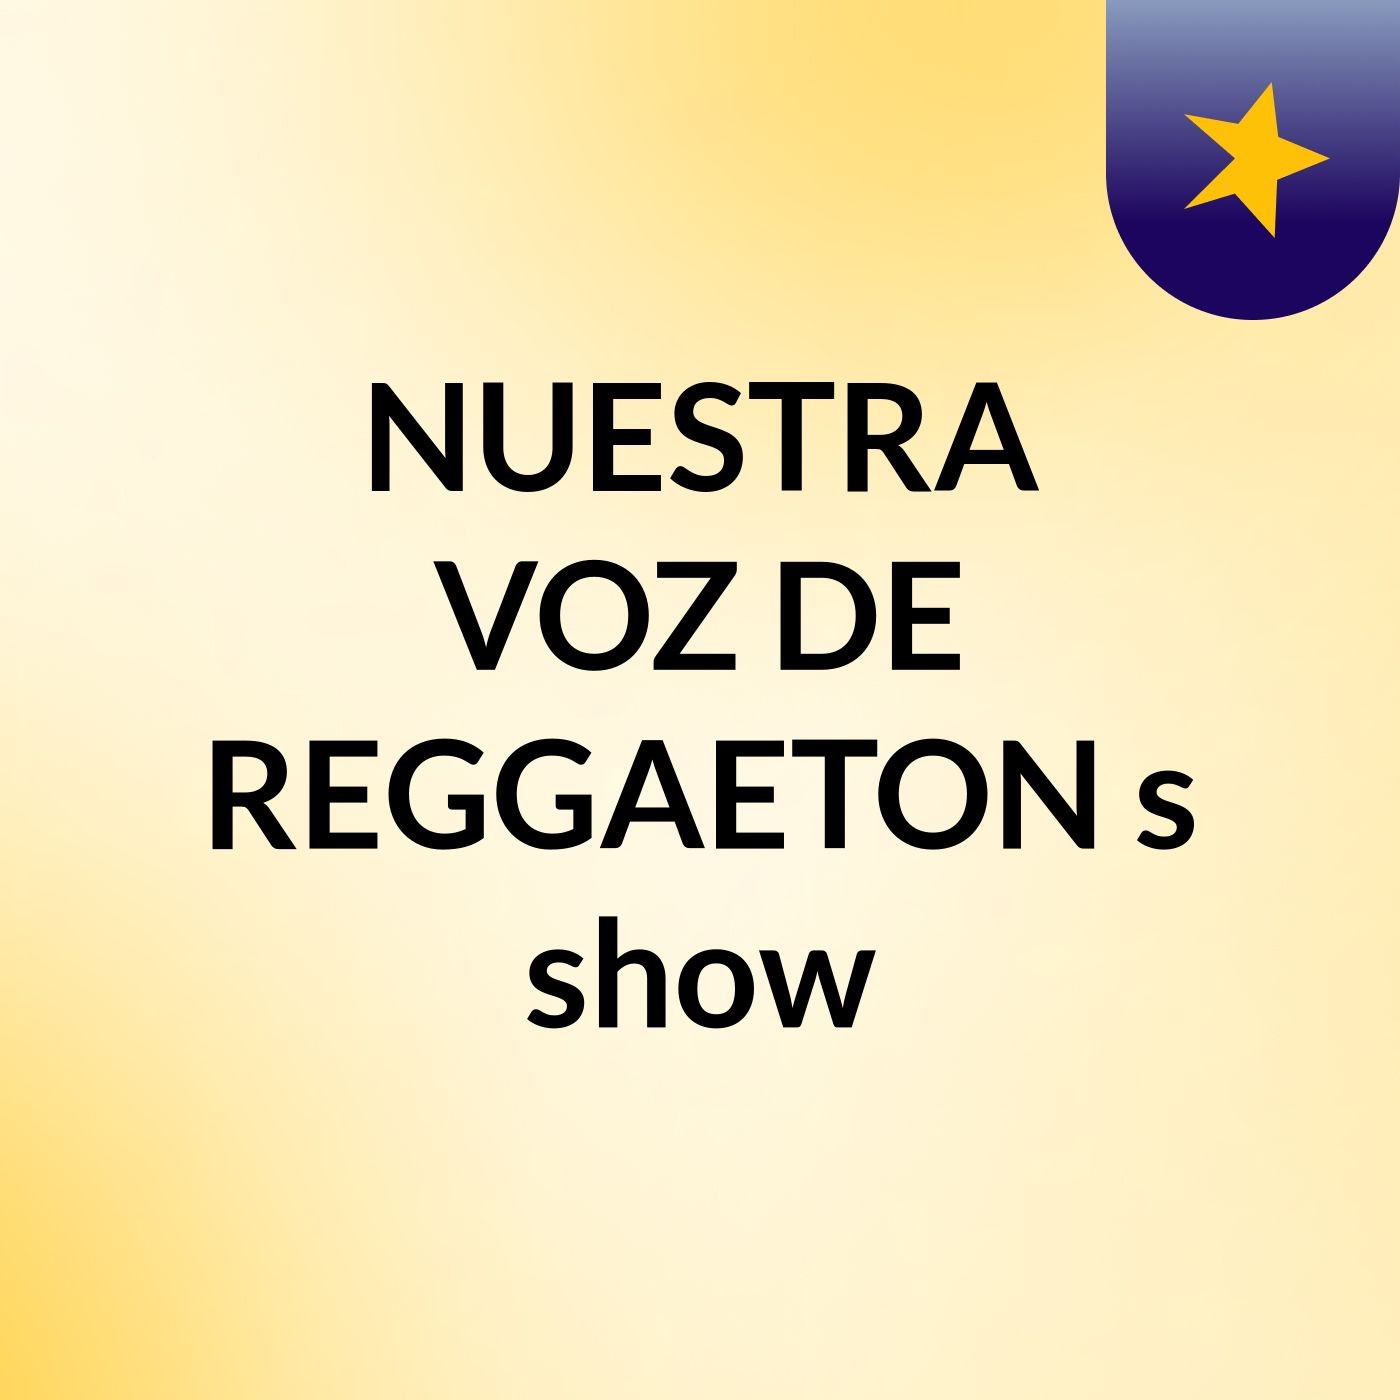 NUESTRA VOZ DE REGGAETON's show